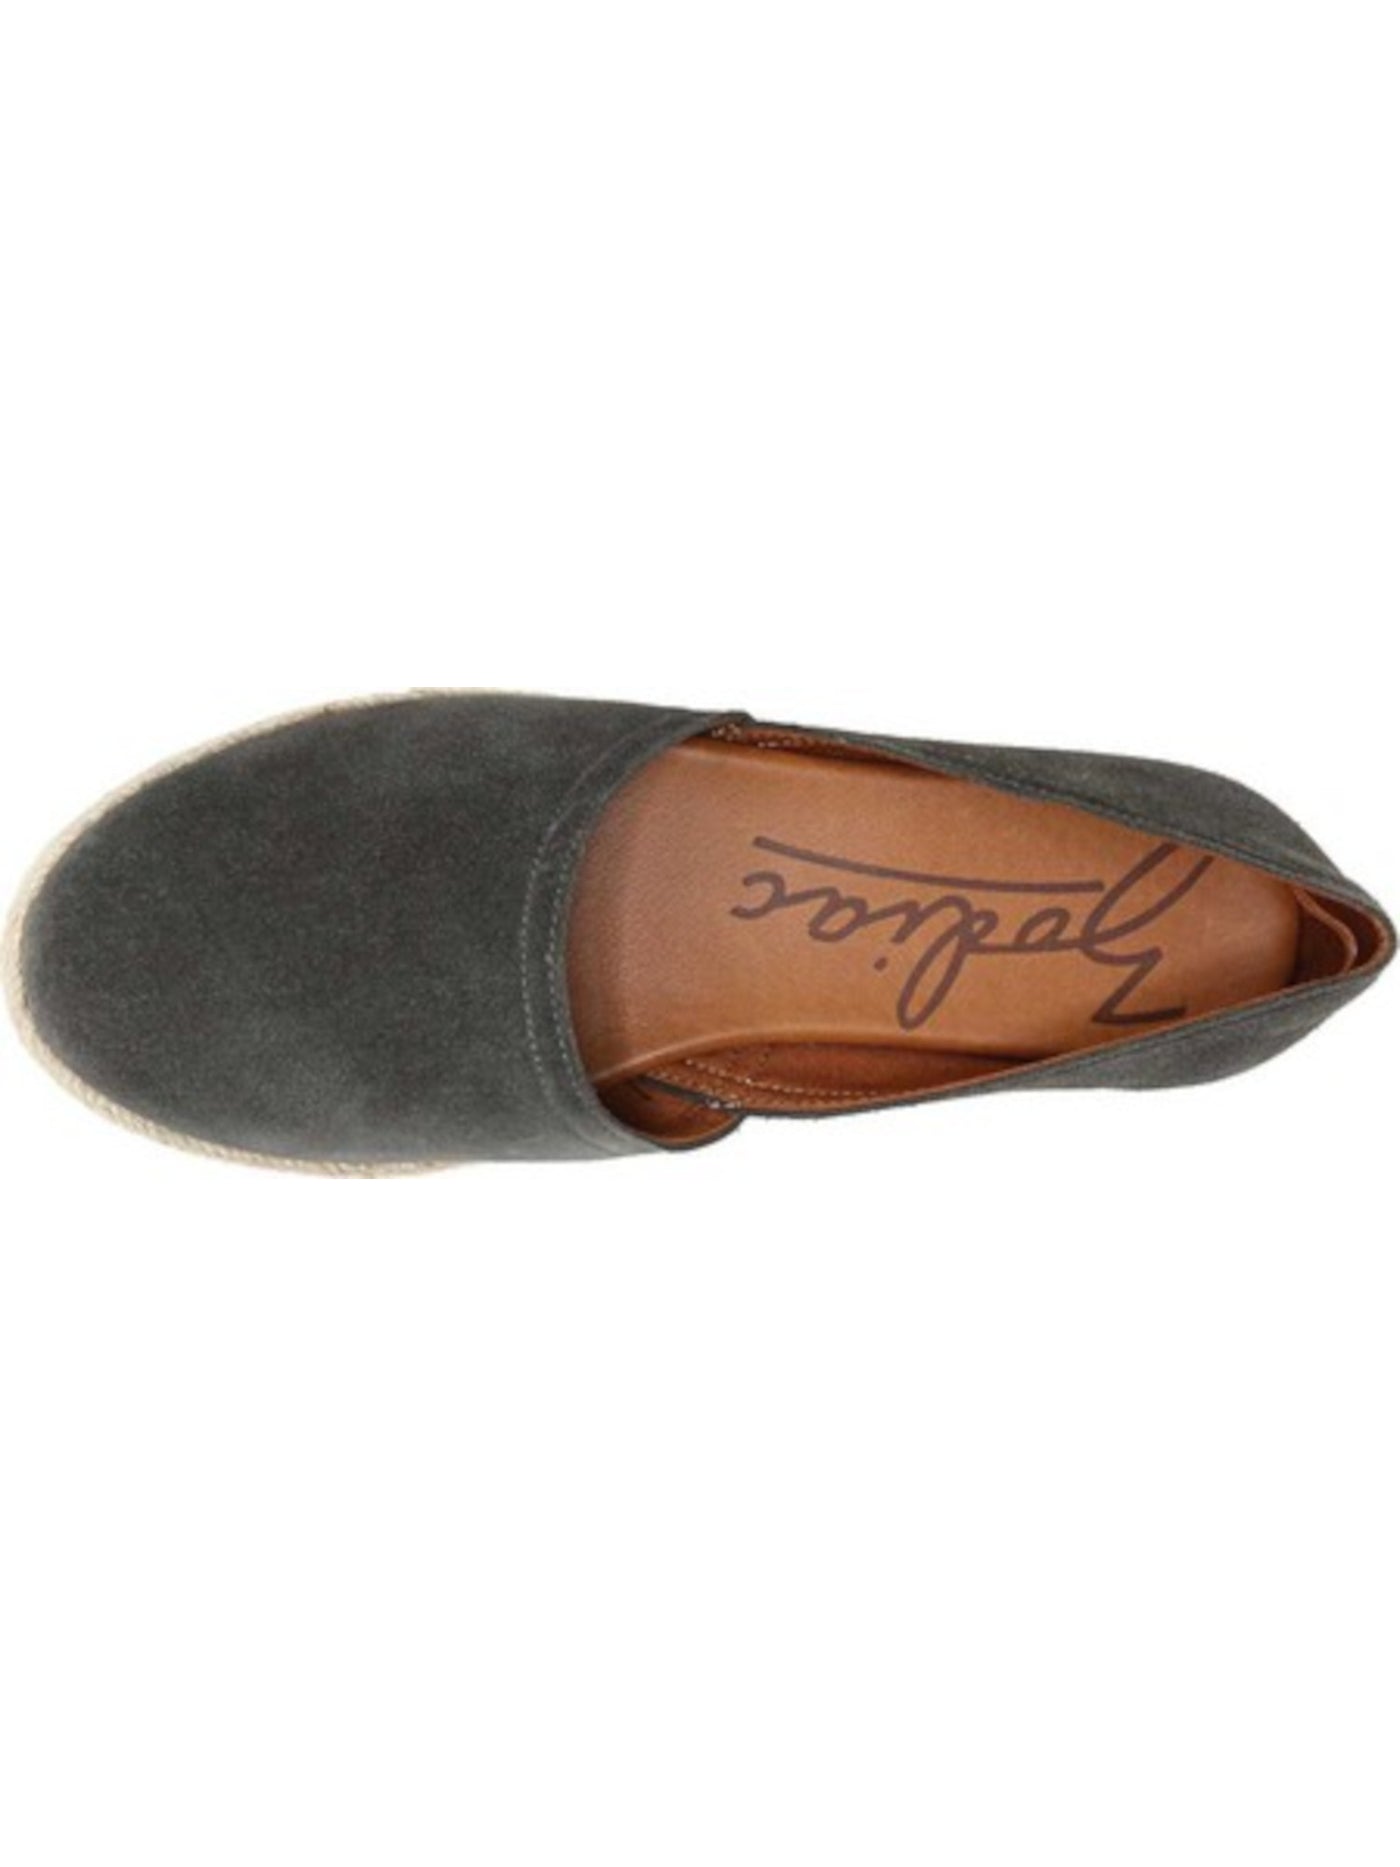 ZODIAC Womens Gray Cushioned Viv Round Toe Platform Slip On Leather Espadrille Shoes 6 M